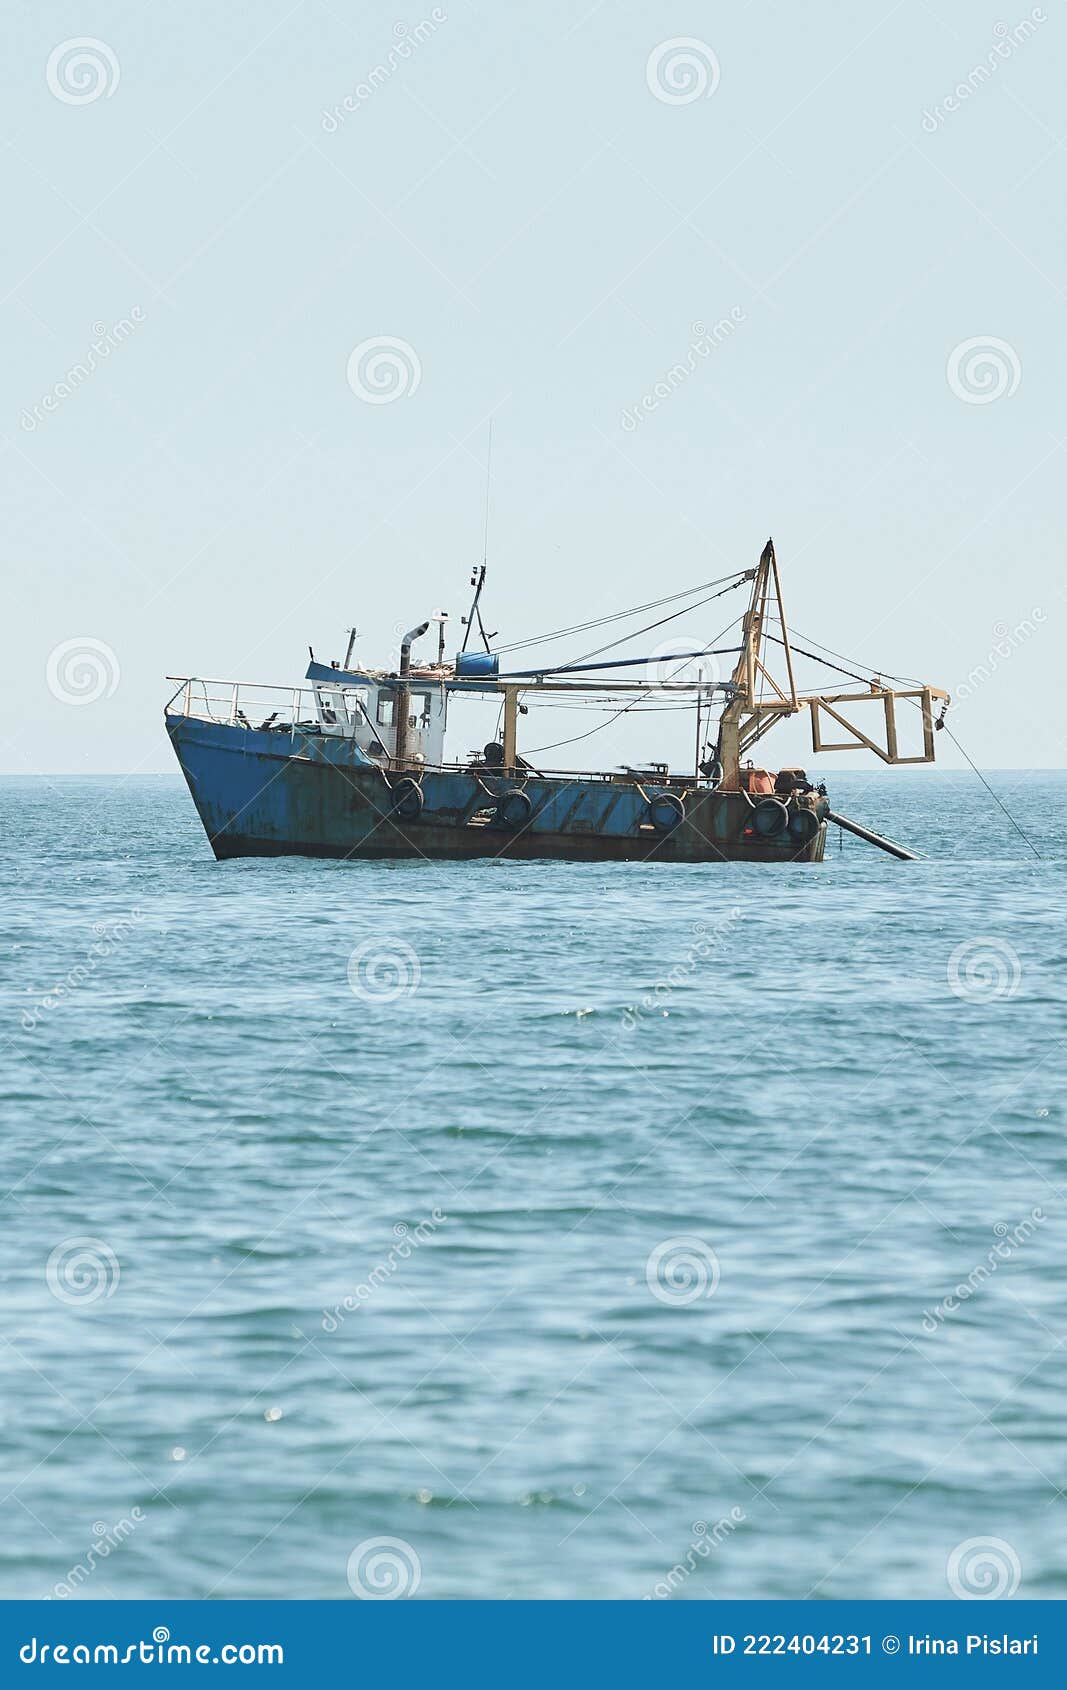 Fishing Boat, Trawler Fishing Razor Fish in an Open Irish Sea. Food  Industry, Traditional Craft, Environmental Damage Concepts Stock Image -  Image of horizon, equipment: 222404231